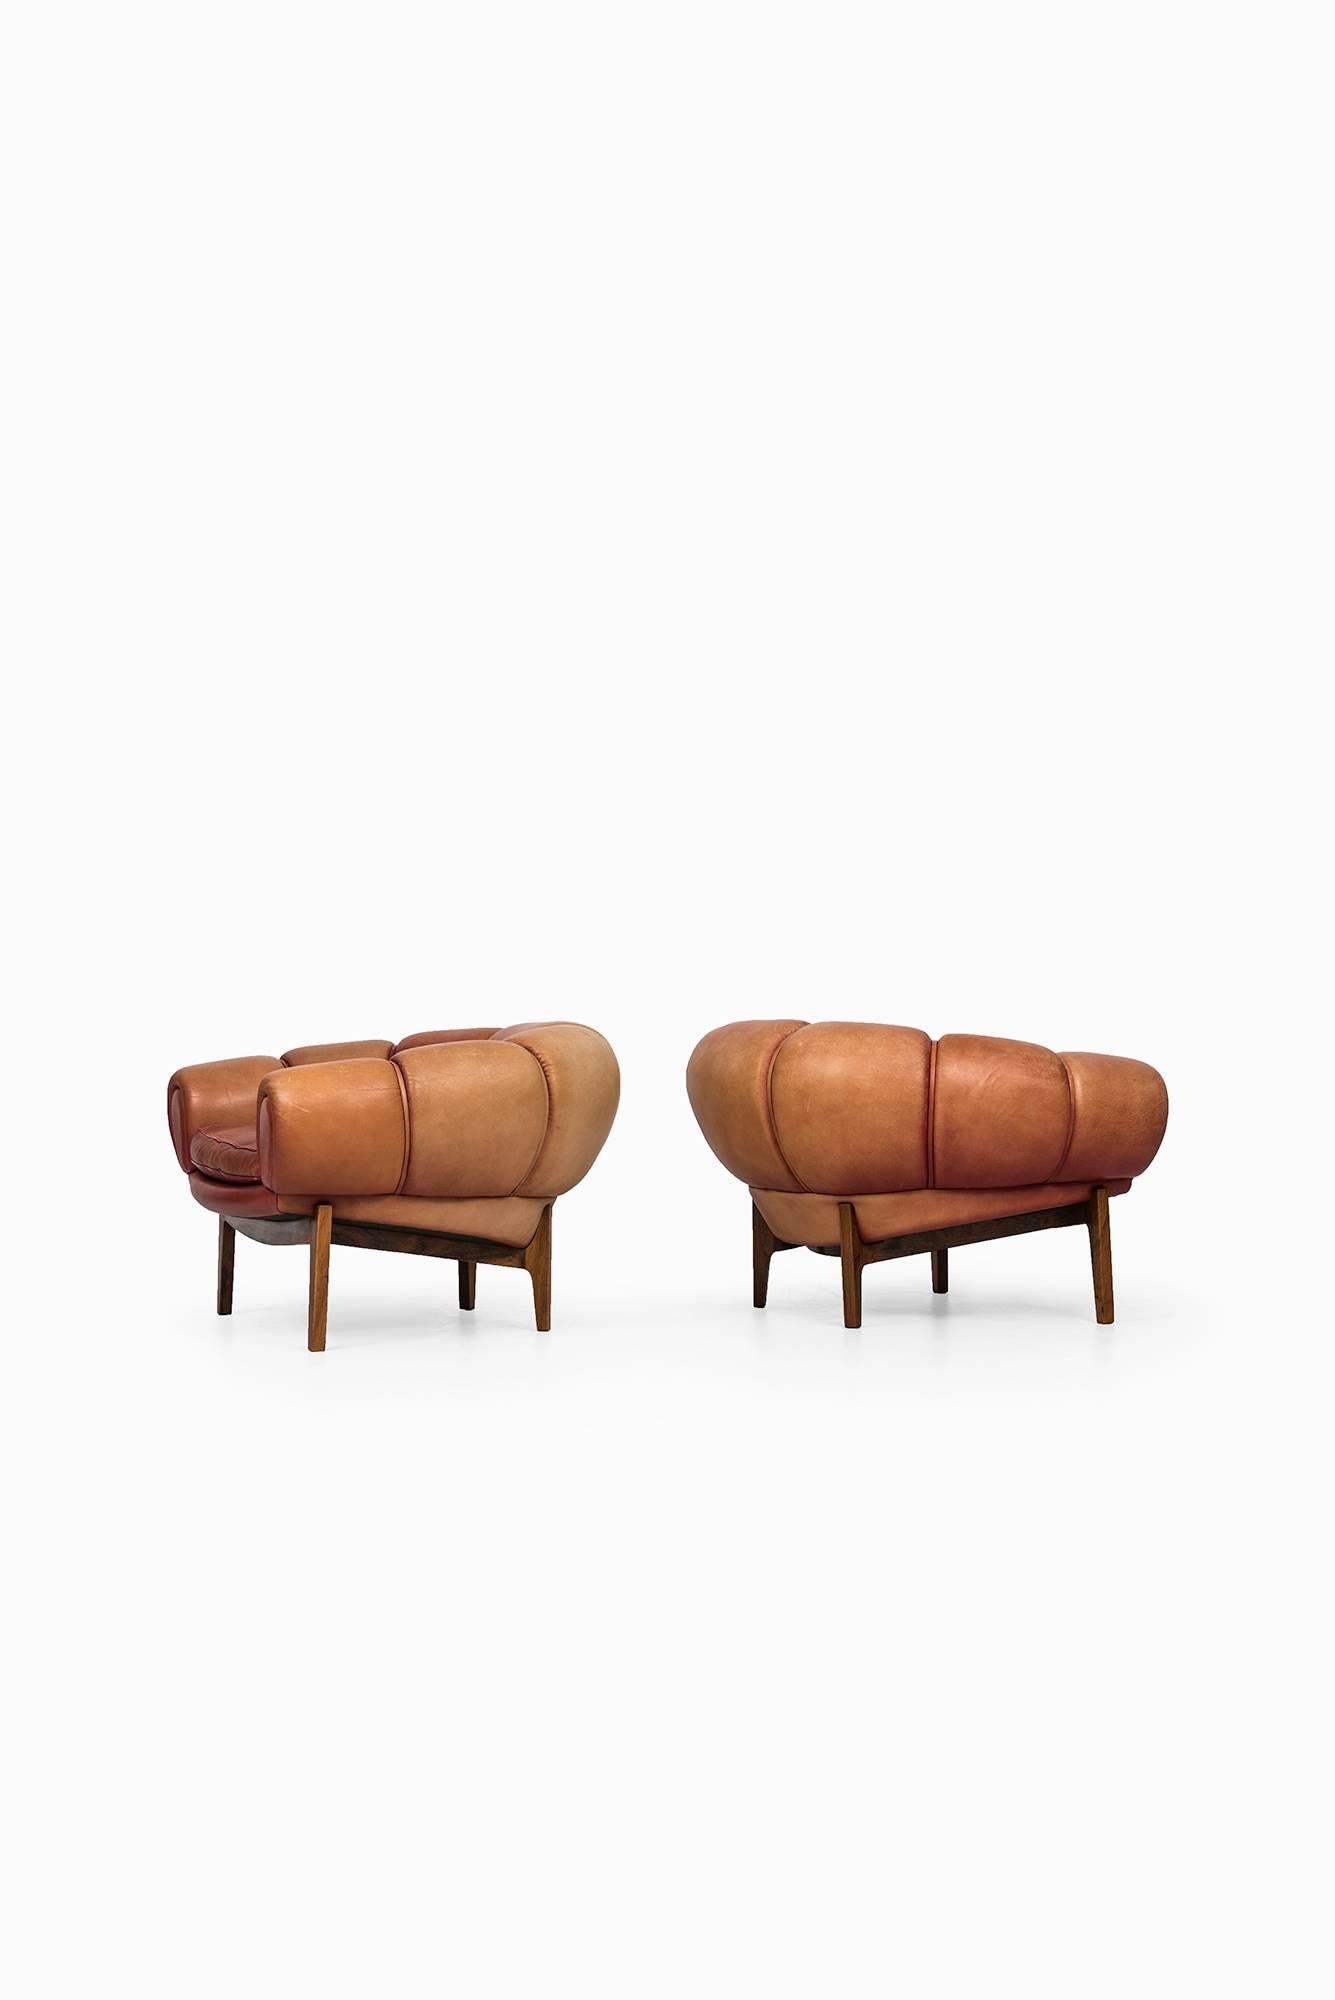 Very rare pair of easy chairs model Croissant designed by Illum Wikkelsø. Produced by Holger Christiansen in Denmark.